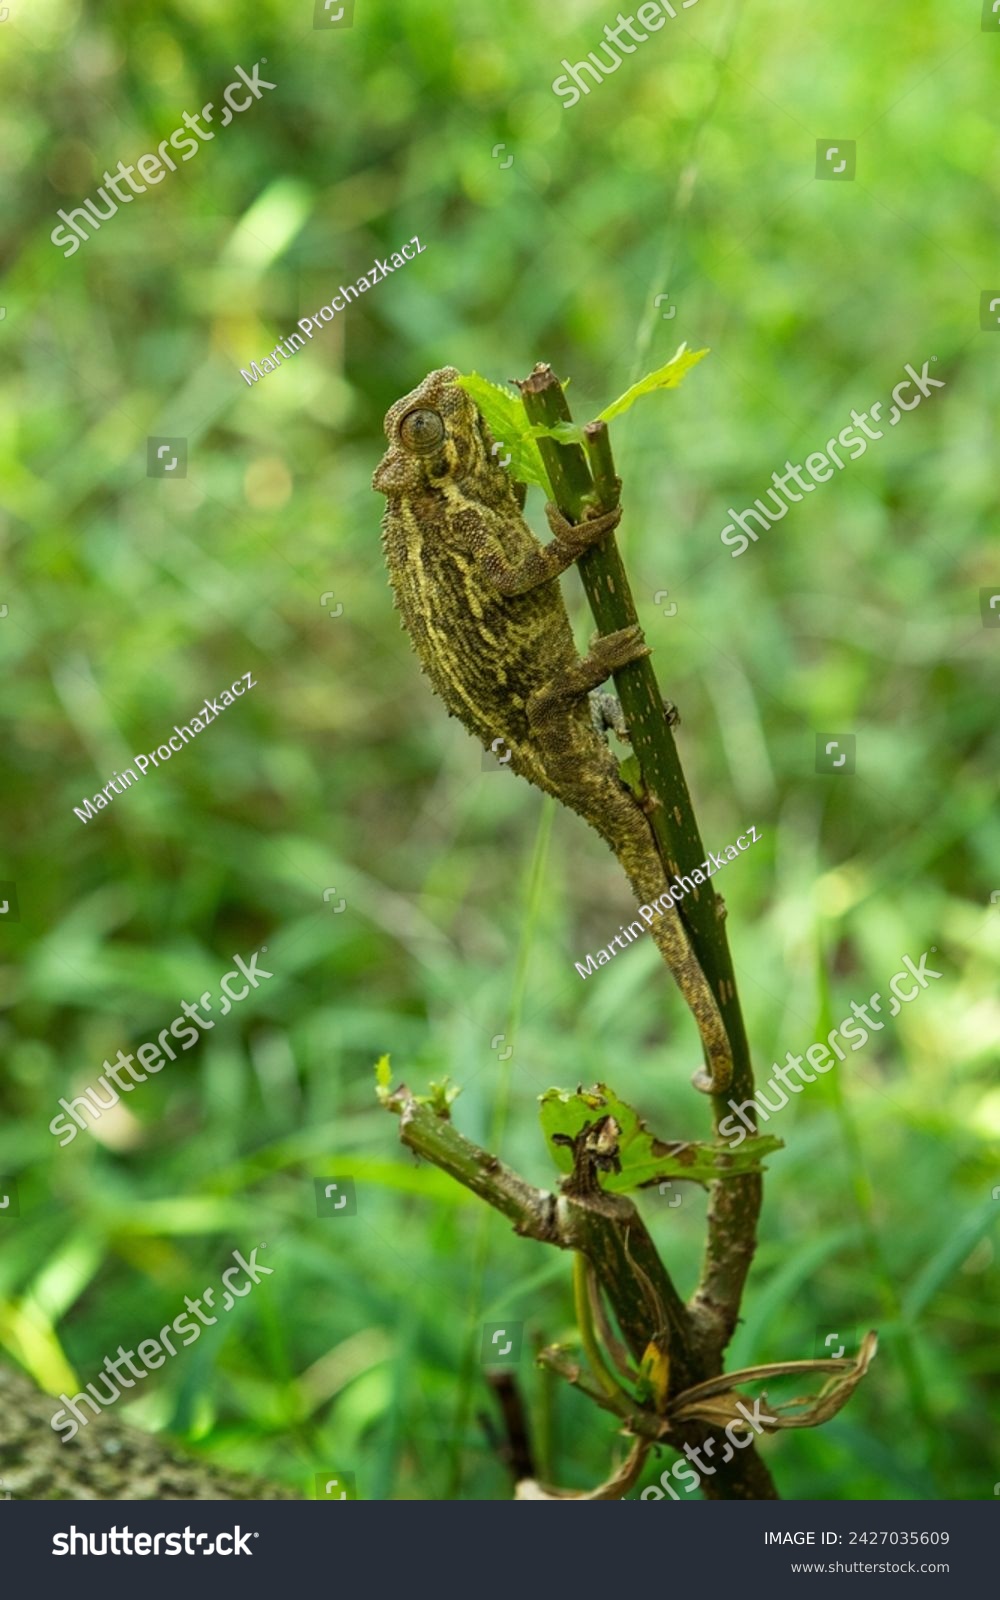 Trioceros rudis chameleon in Uganda's forest. Coarse chameleon is hunting in the forest. Animals who change color of skin. #2427035609